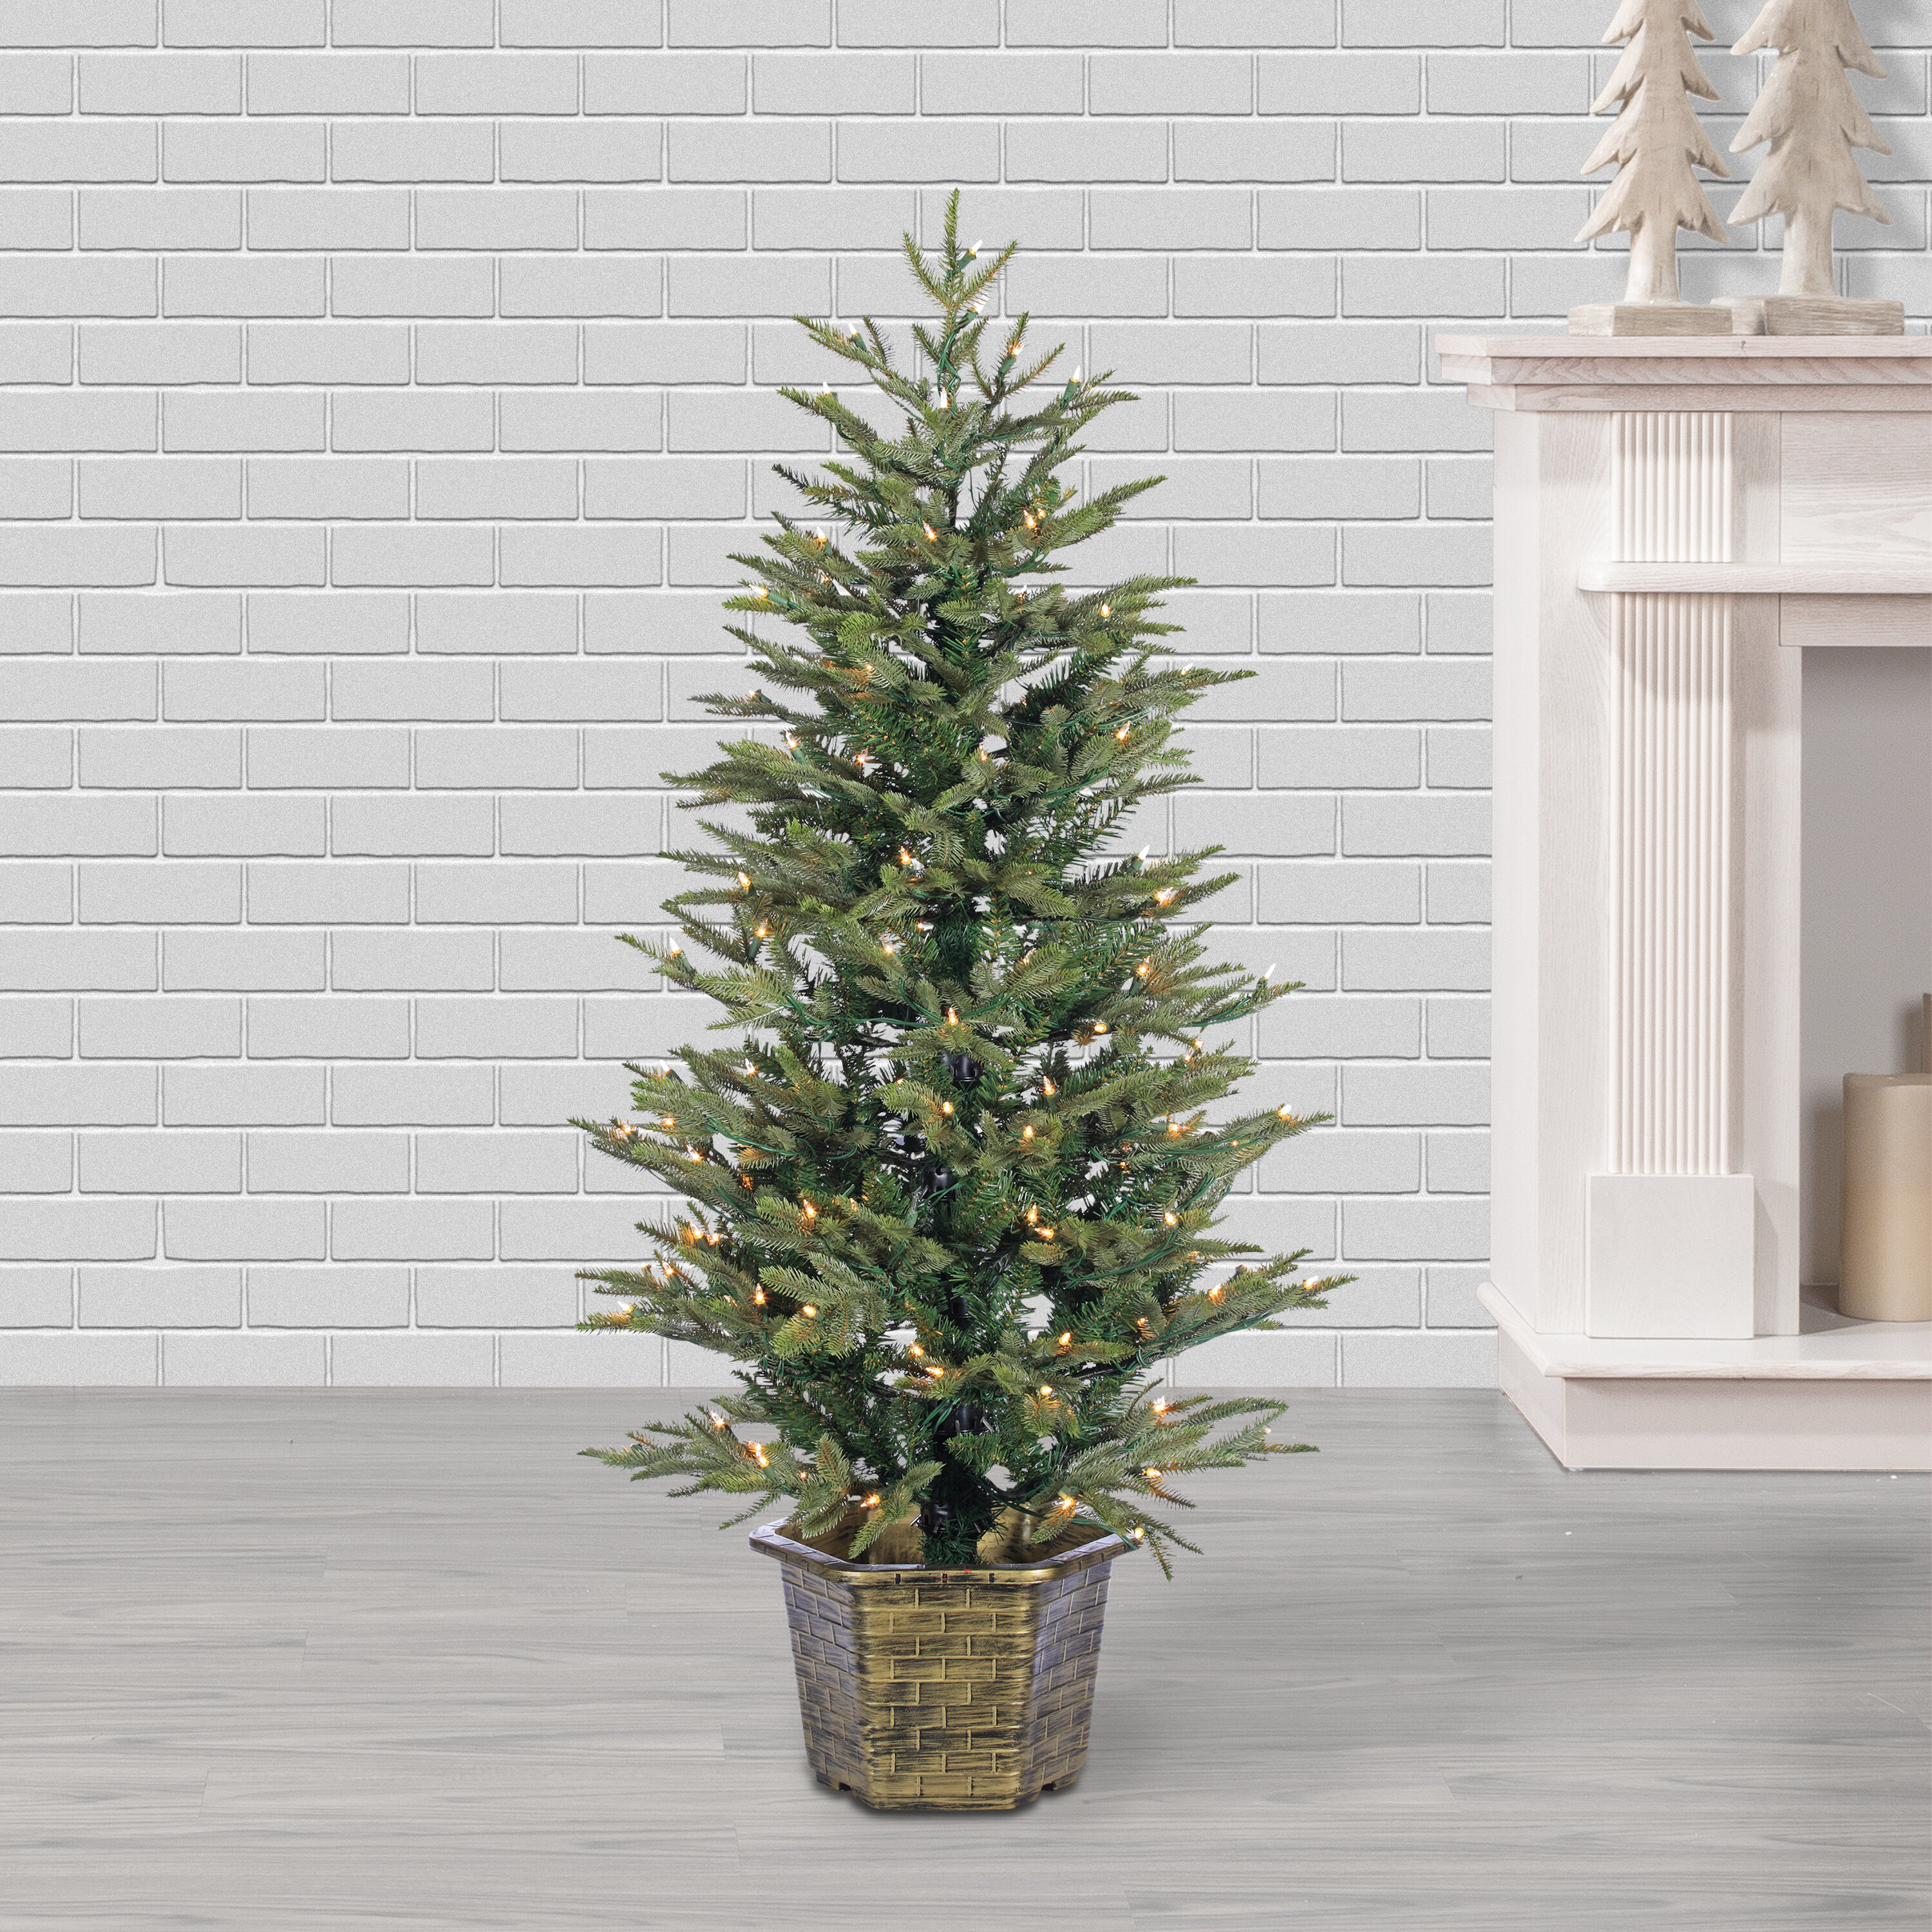 The Holiday Aisle® 4.5' Lighted Christmas Tree | Wayfair